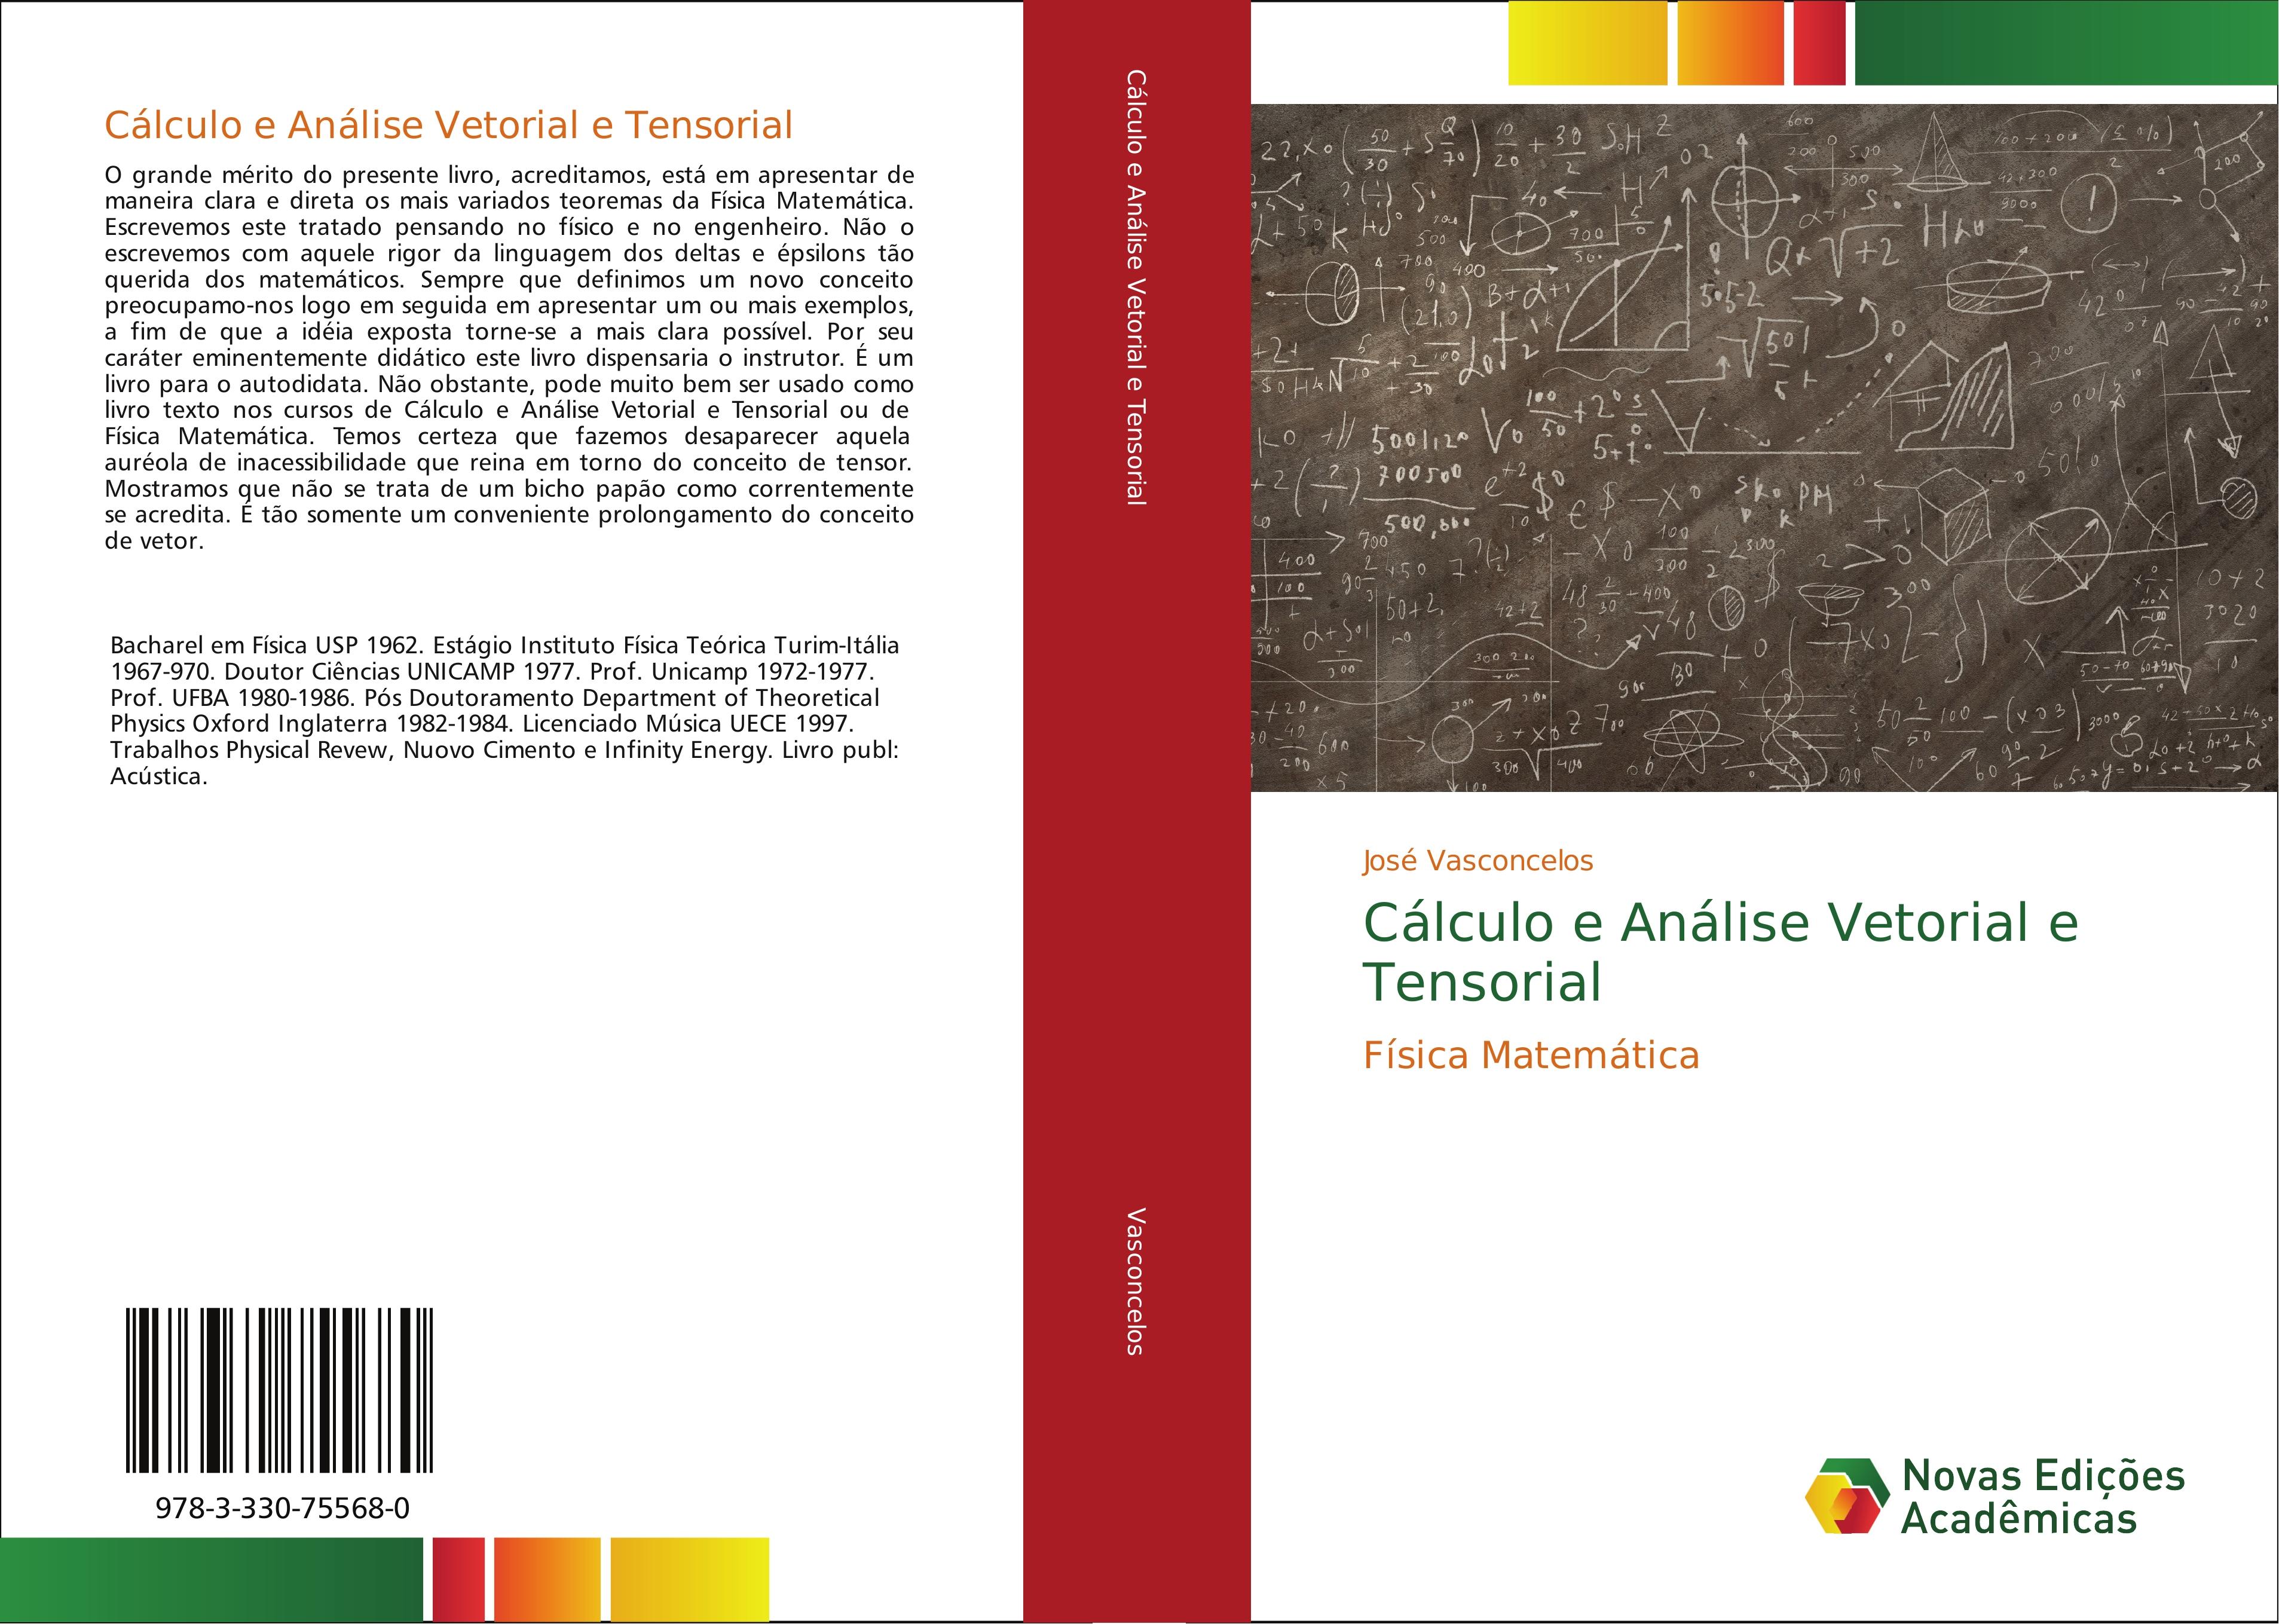 Cálculo e Análise Vetorial e Tensorial - José Vasconcelos